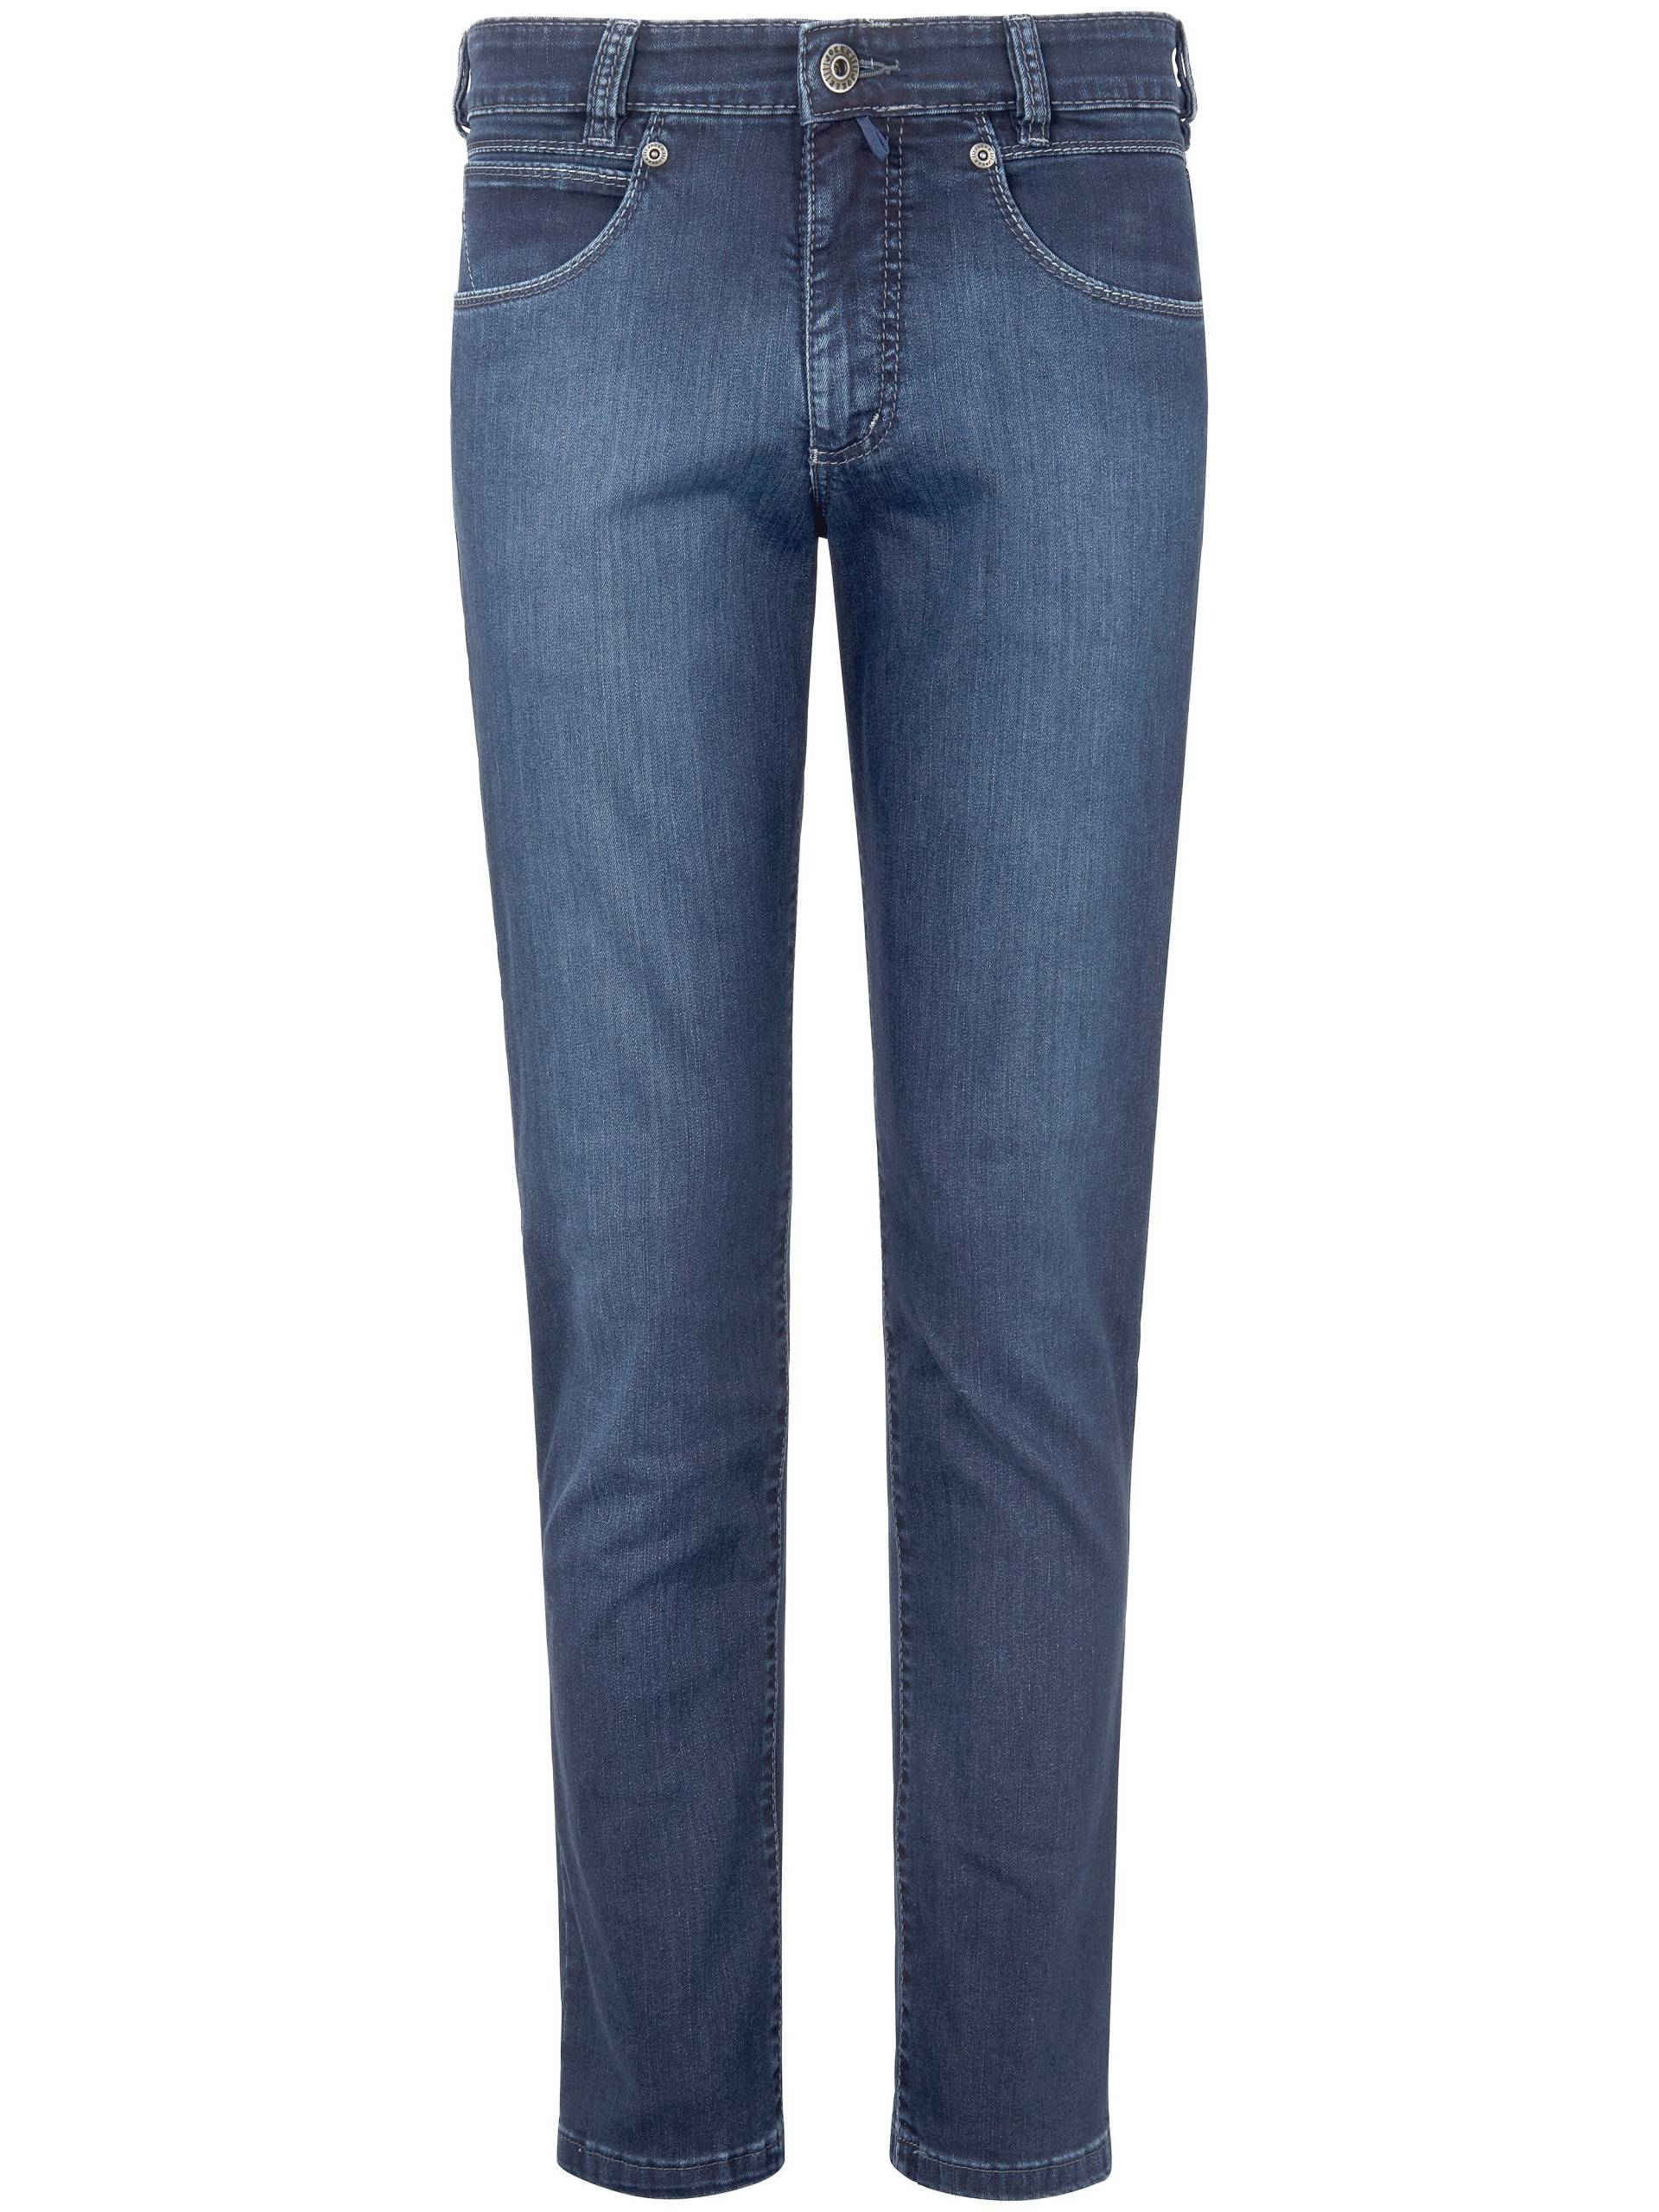 Jeans Modell Freddy Inch 30 JOKER blau Größe: 38 von JOKER